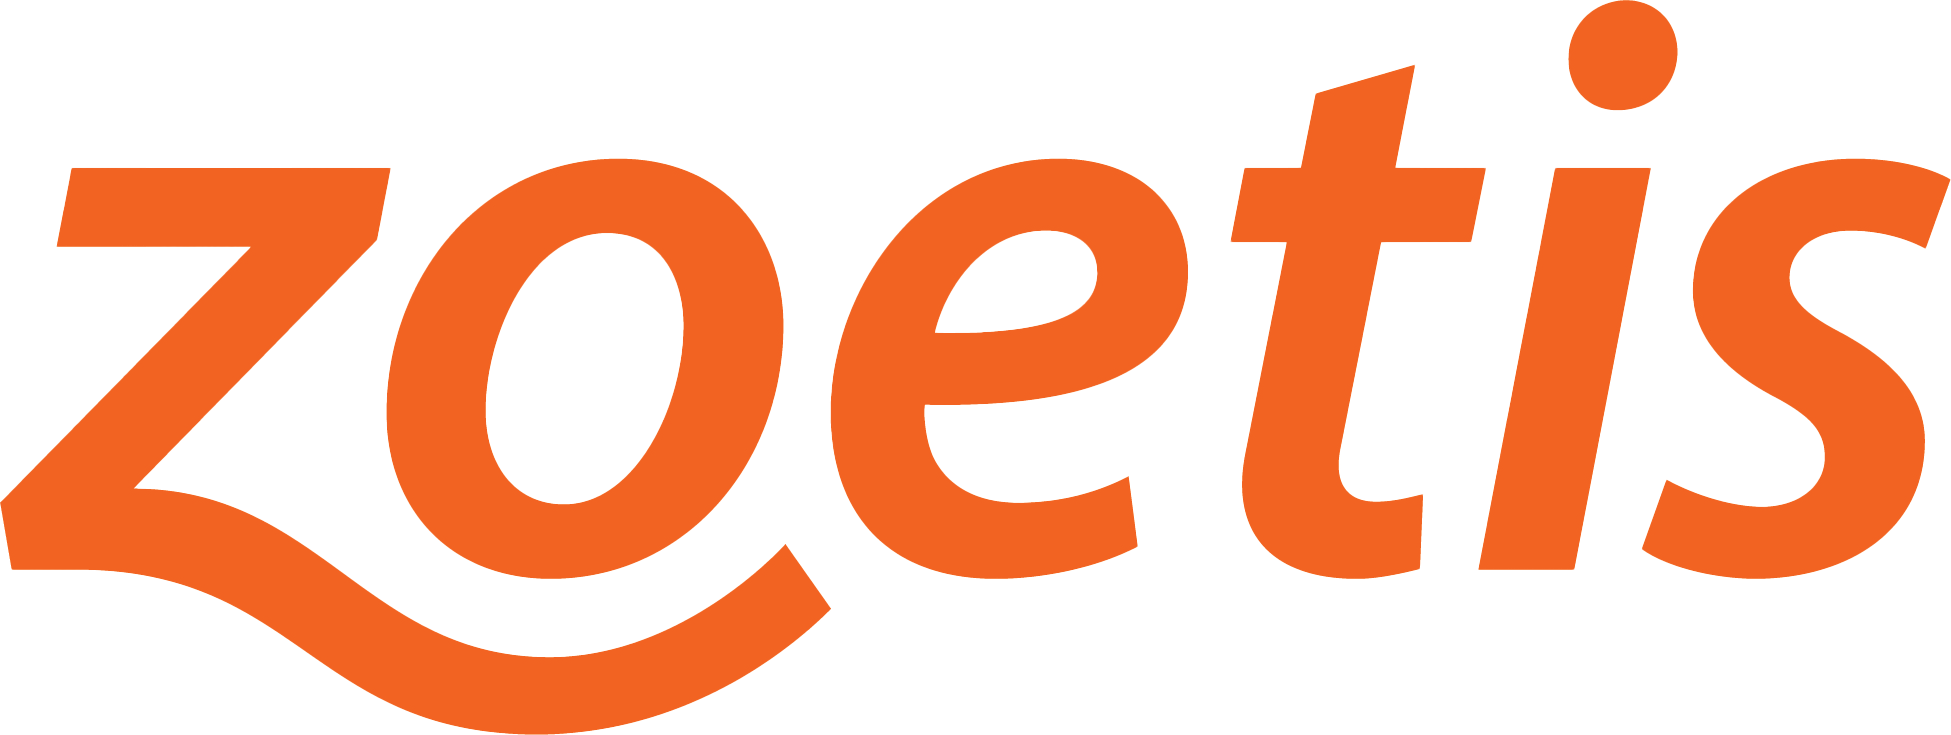 Zoetis logo_transparent_bkg